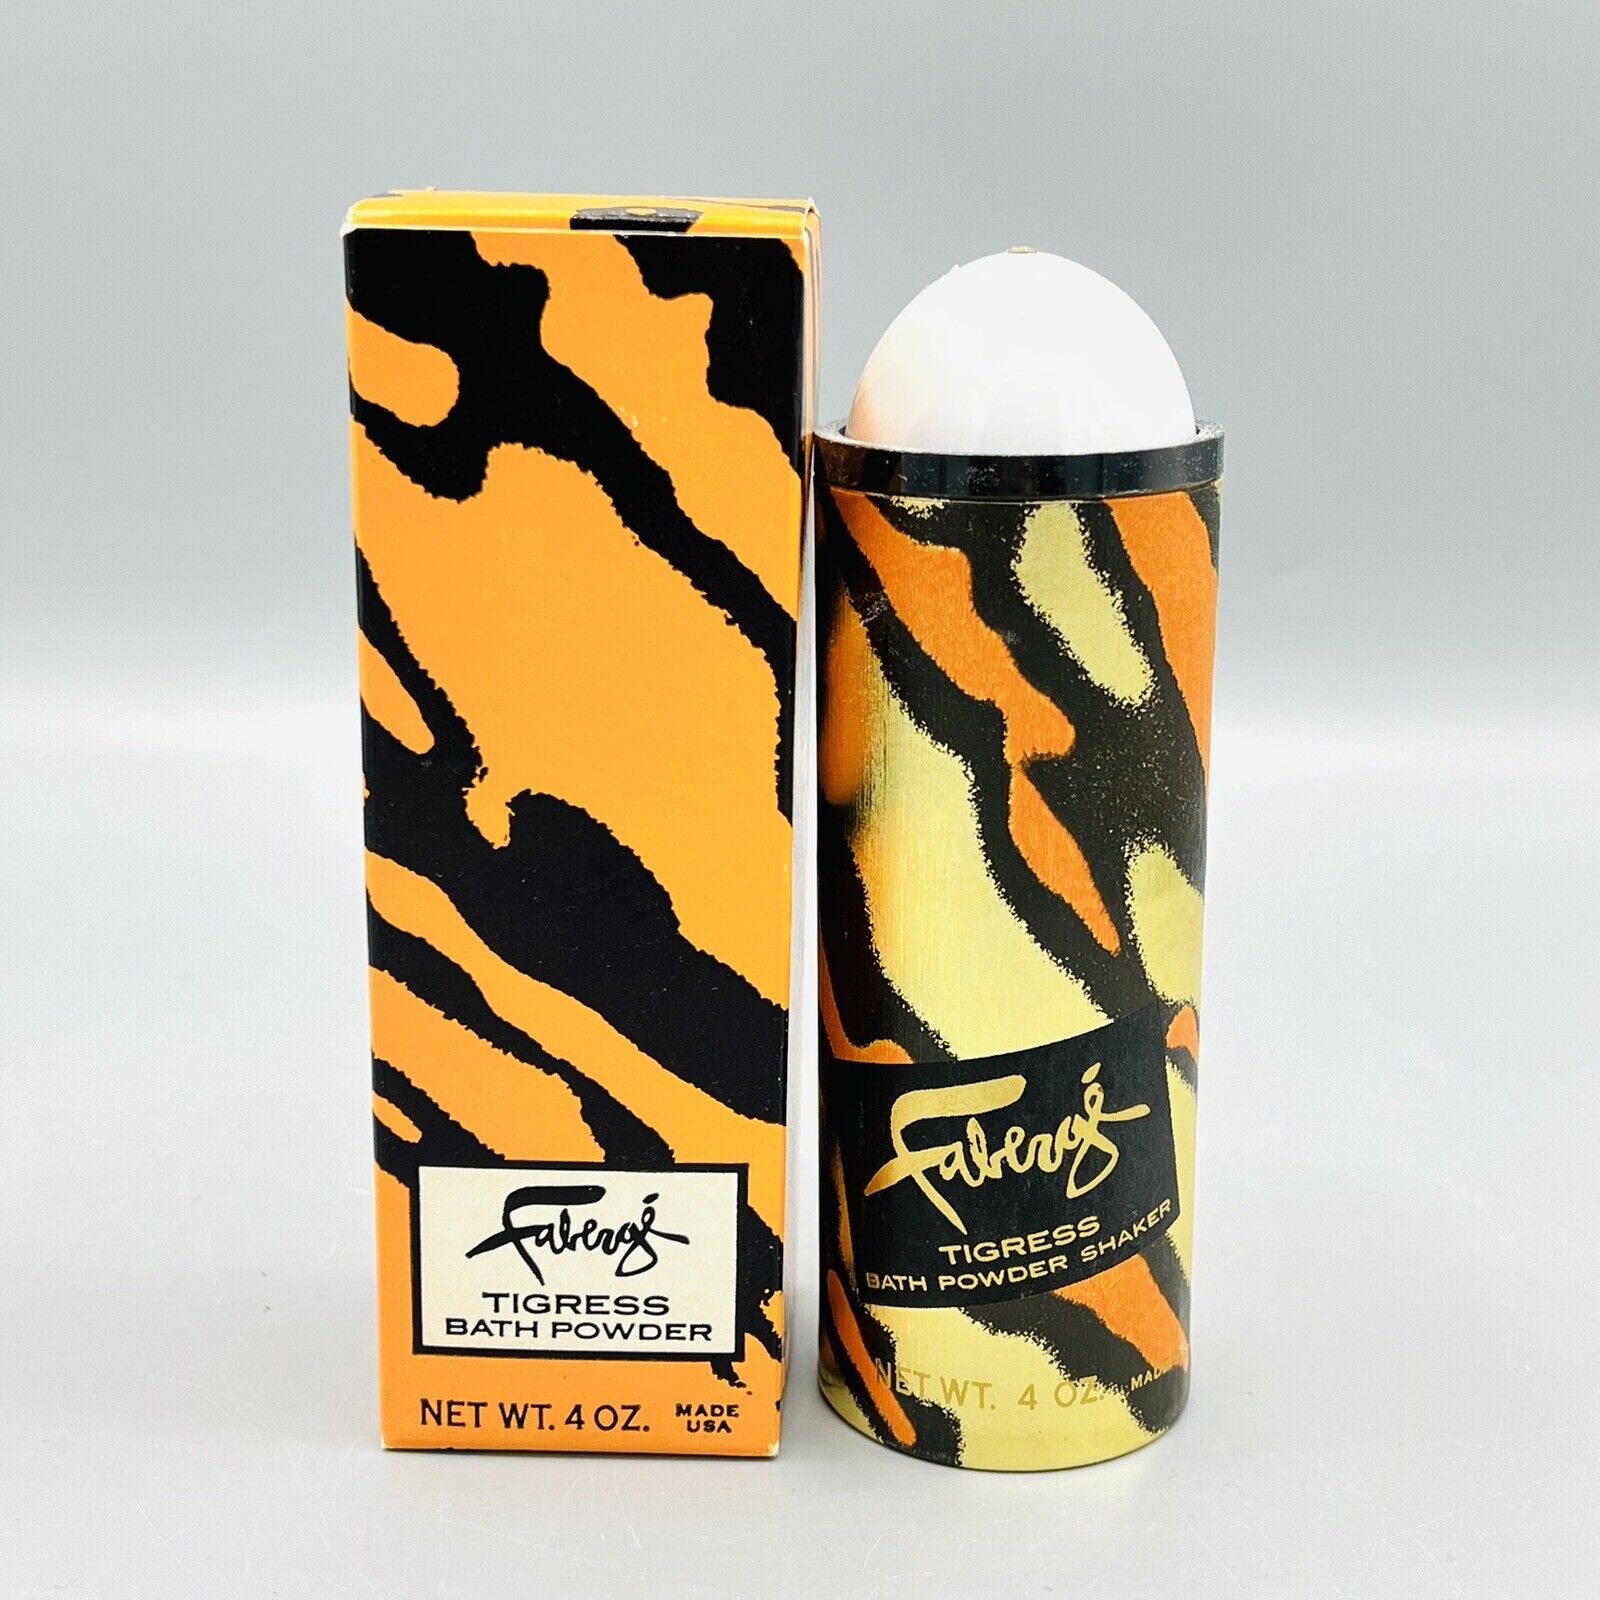 VTG FABERGE TIGRESS Bath Powder Shaker 4 Oz Scented Perfume Body Full With Box